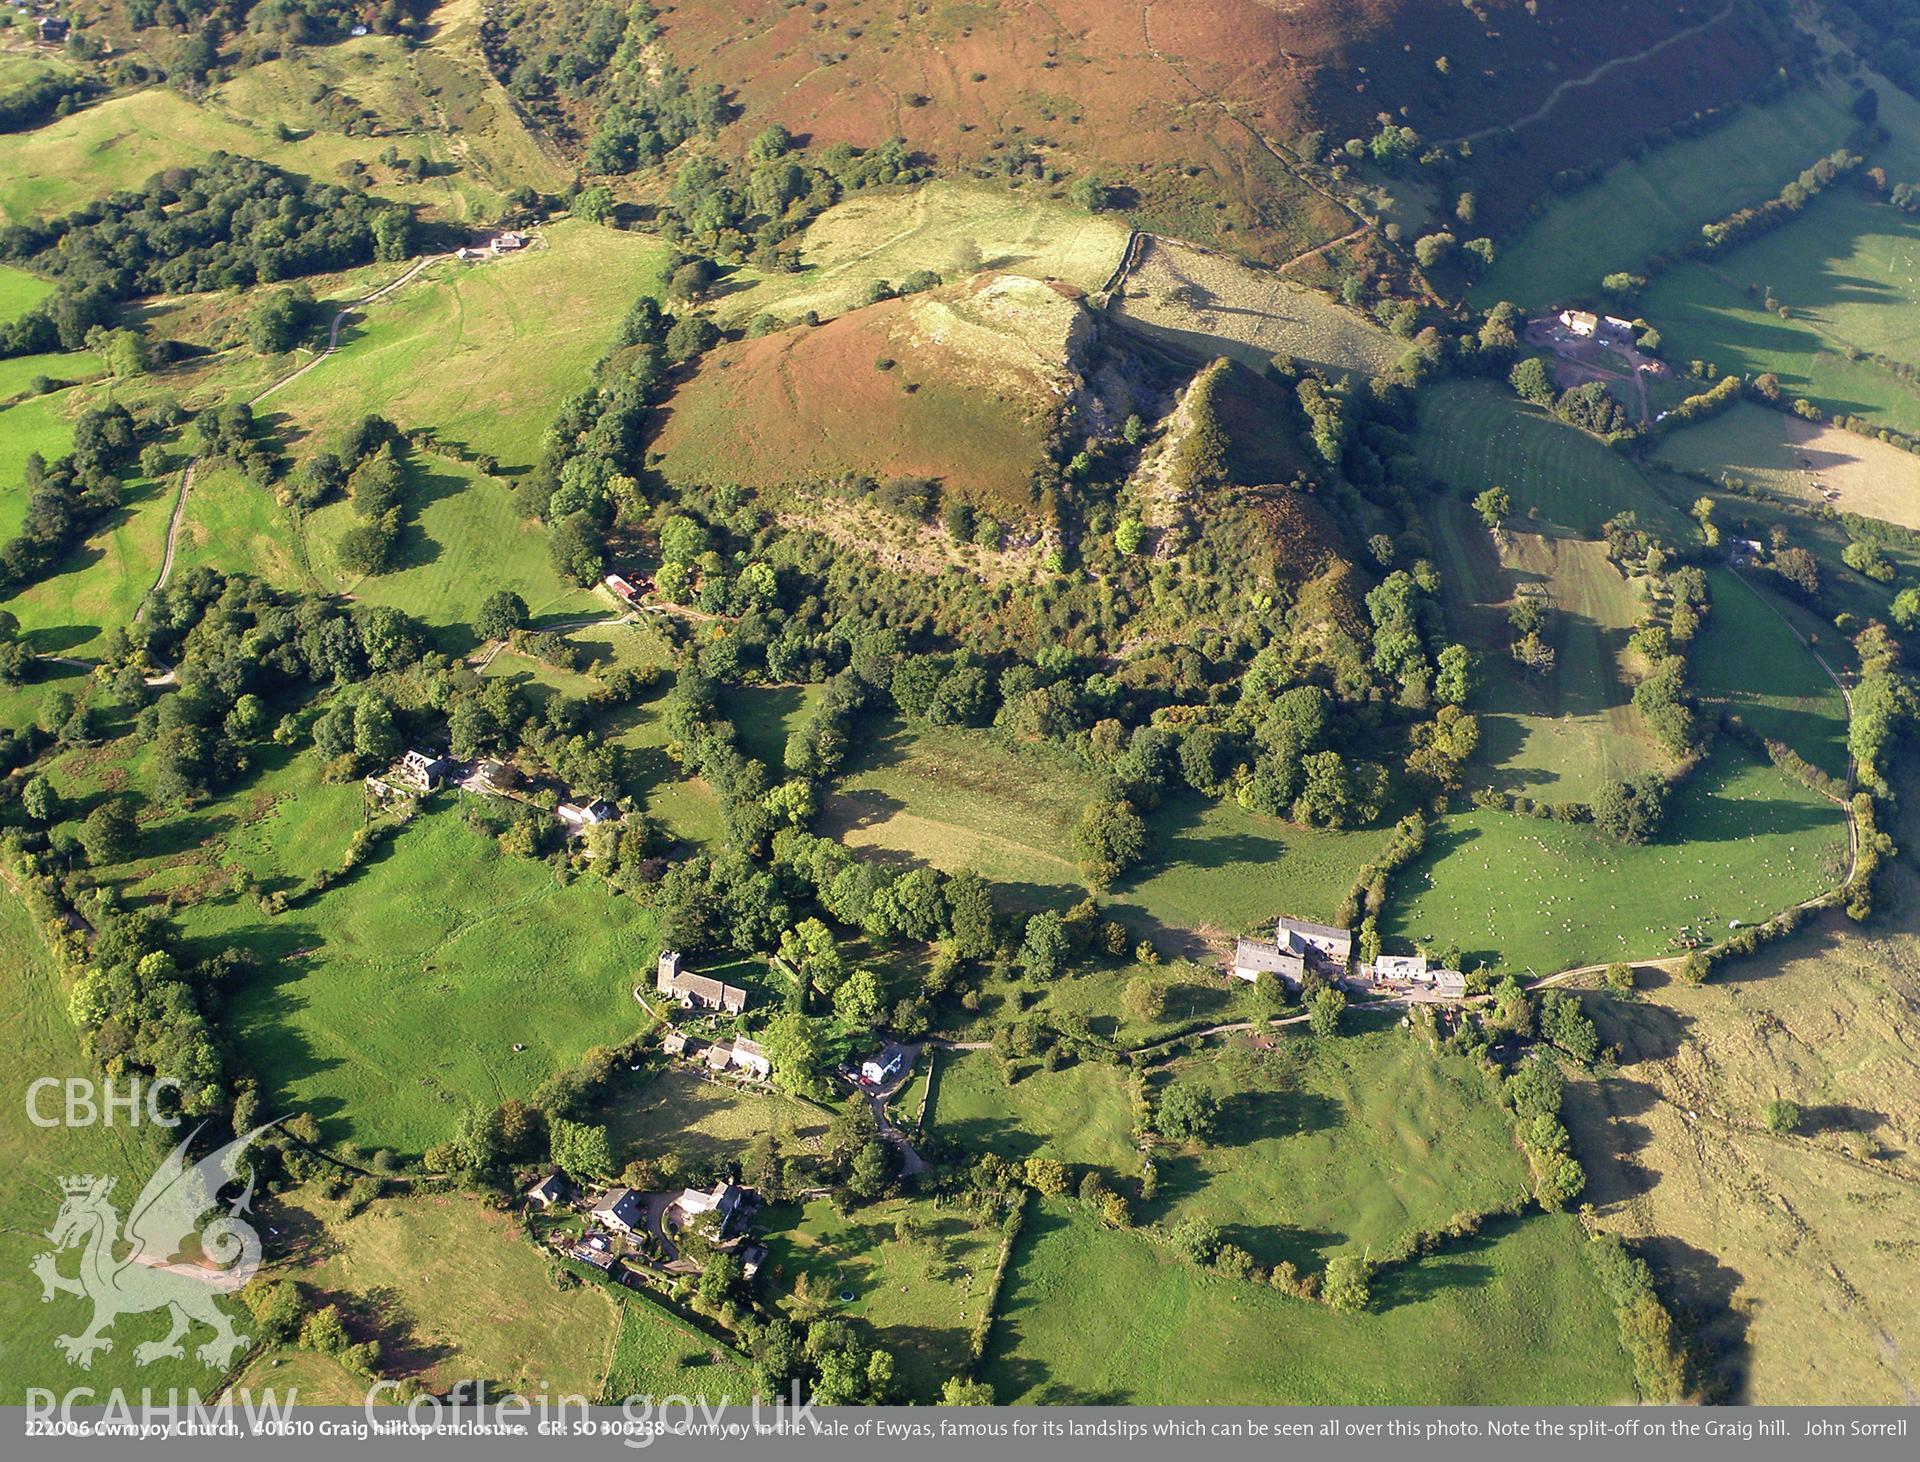 View of Cwmyoy, taken by John Sorrell, September 2009.